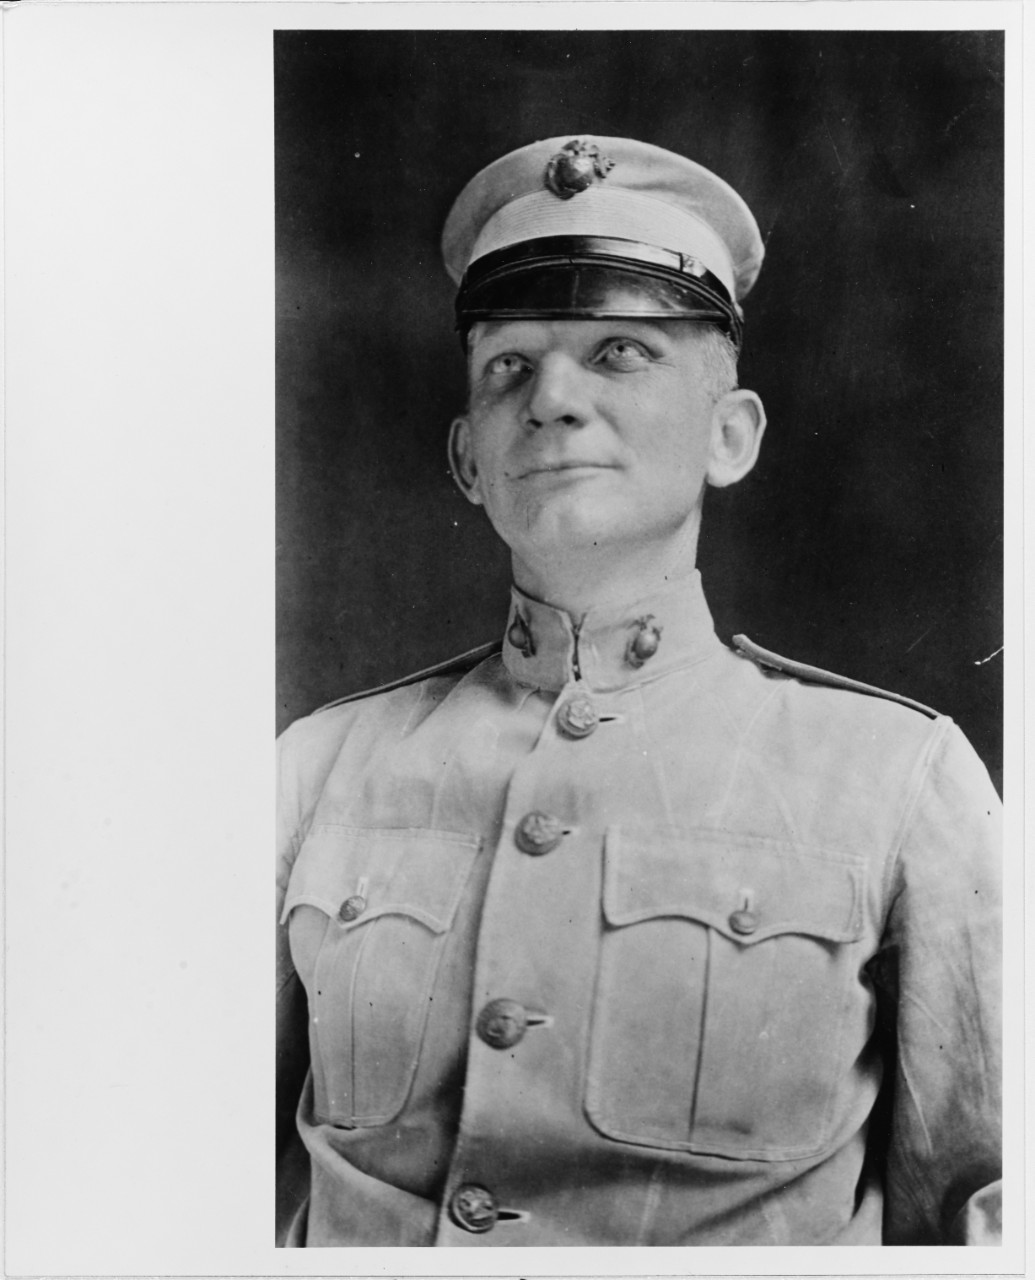 Captain W. C. Harllee, USMC.